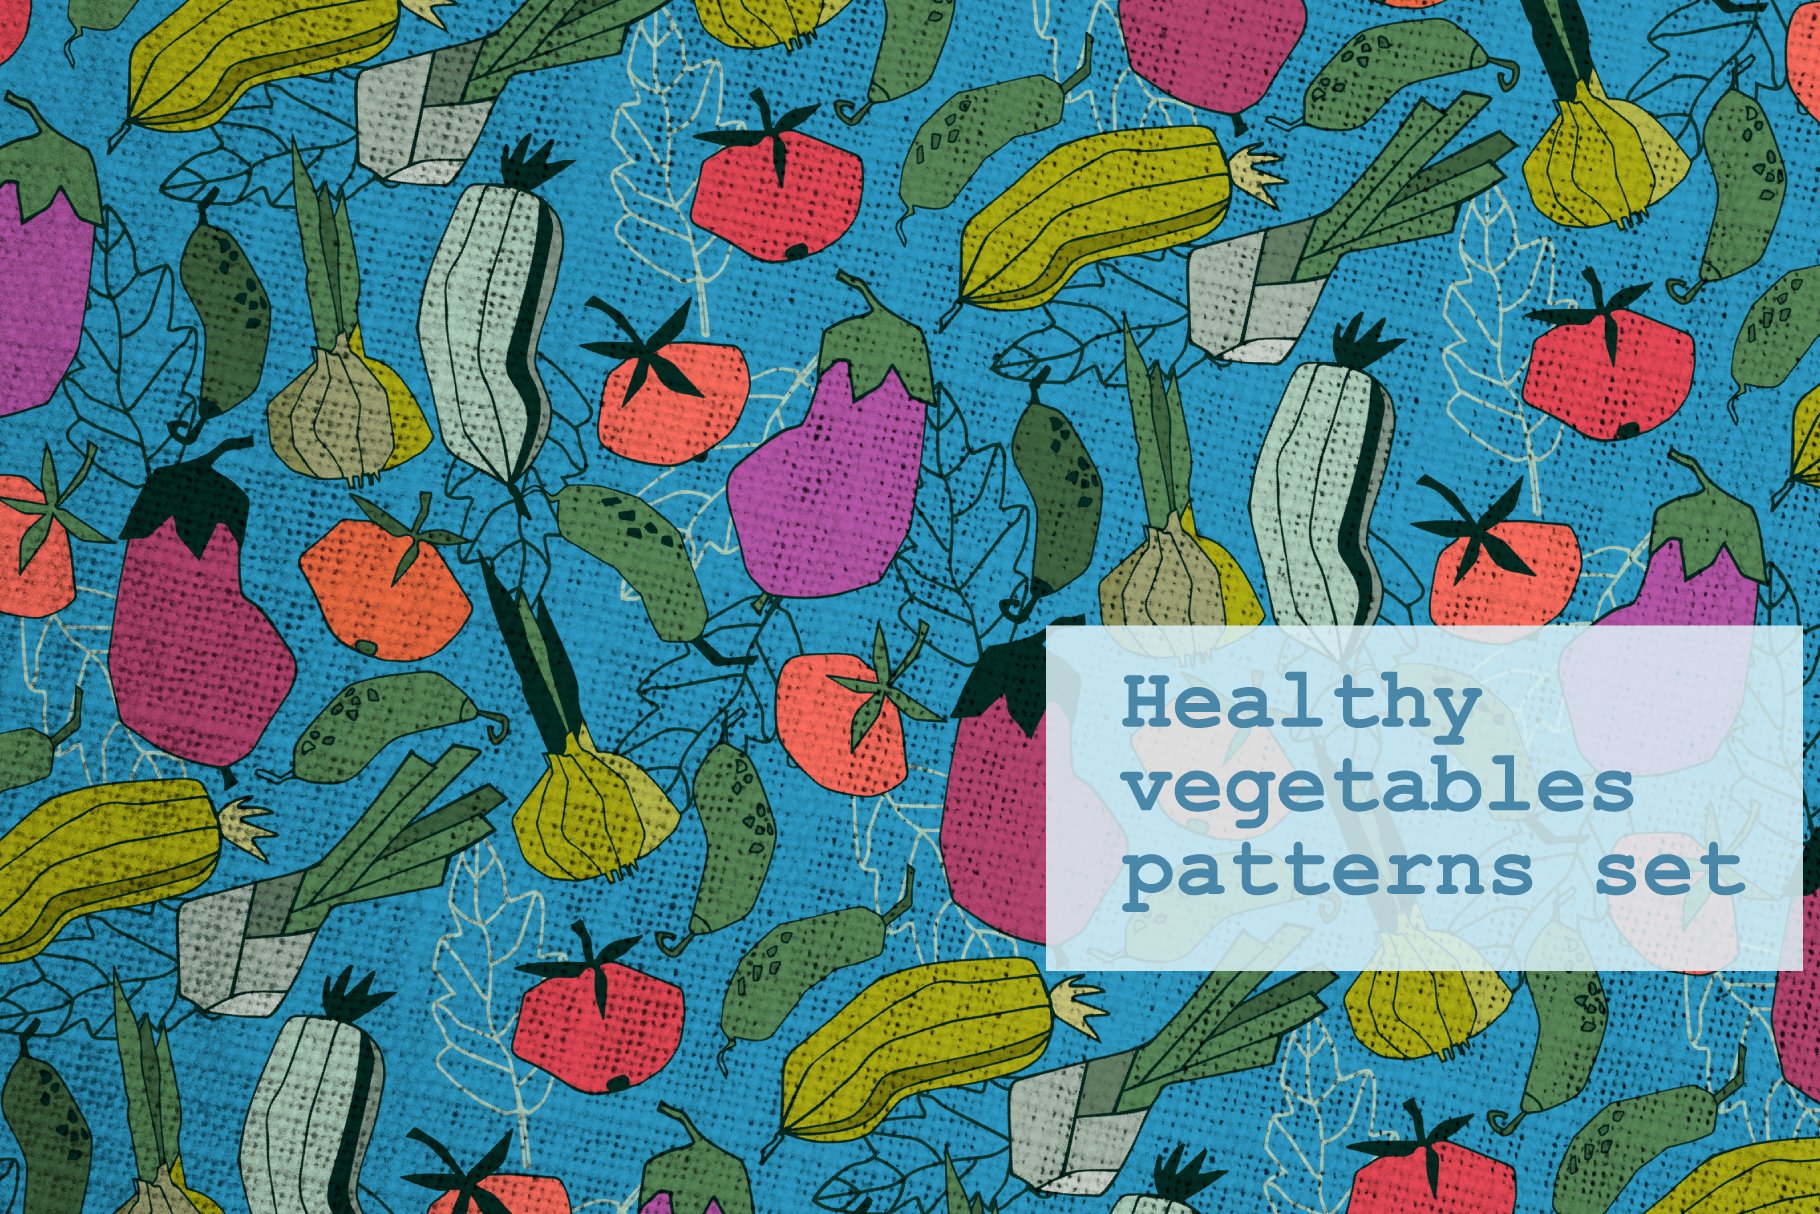 9 Healthy vegetables patterns set cover image.